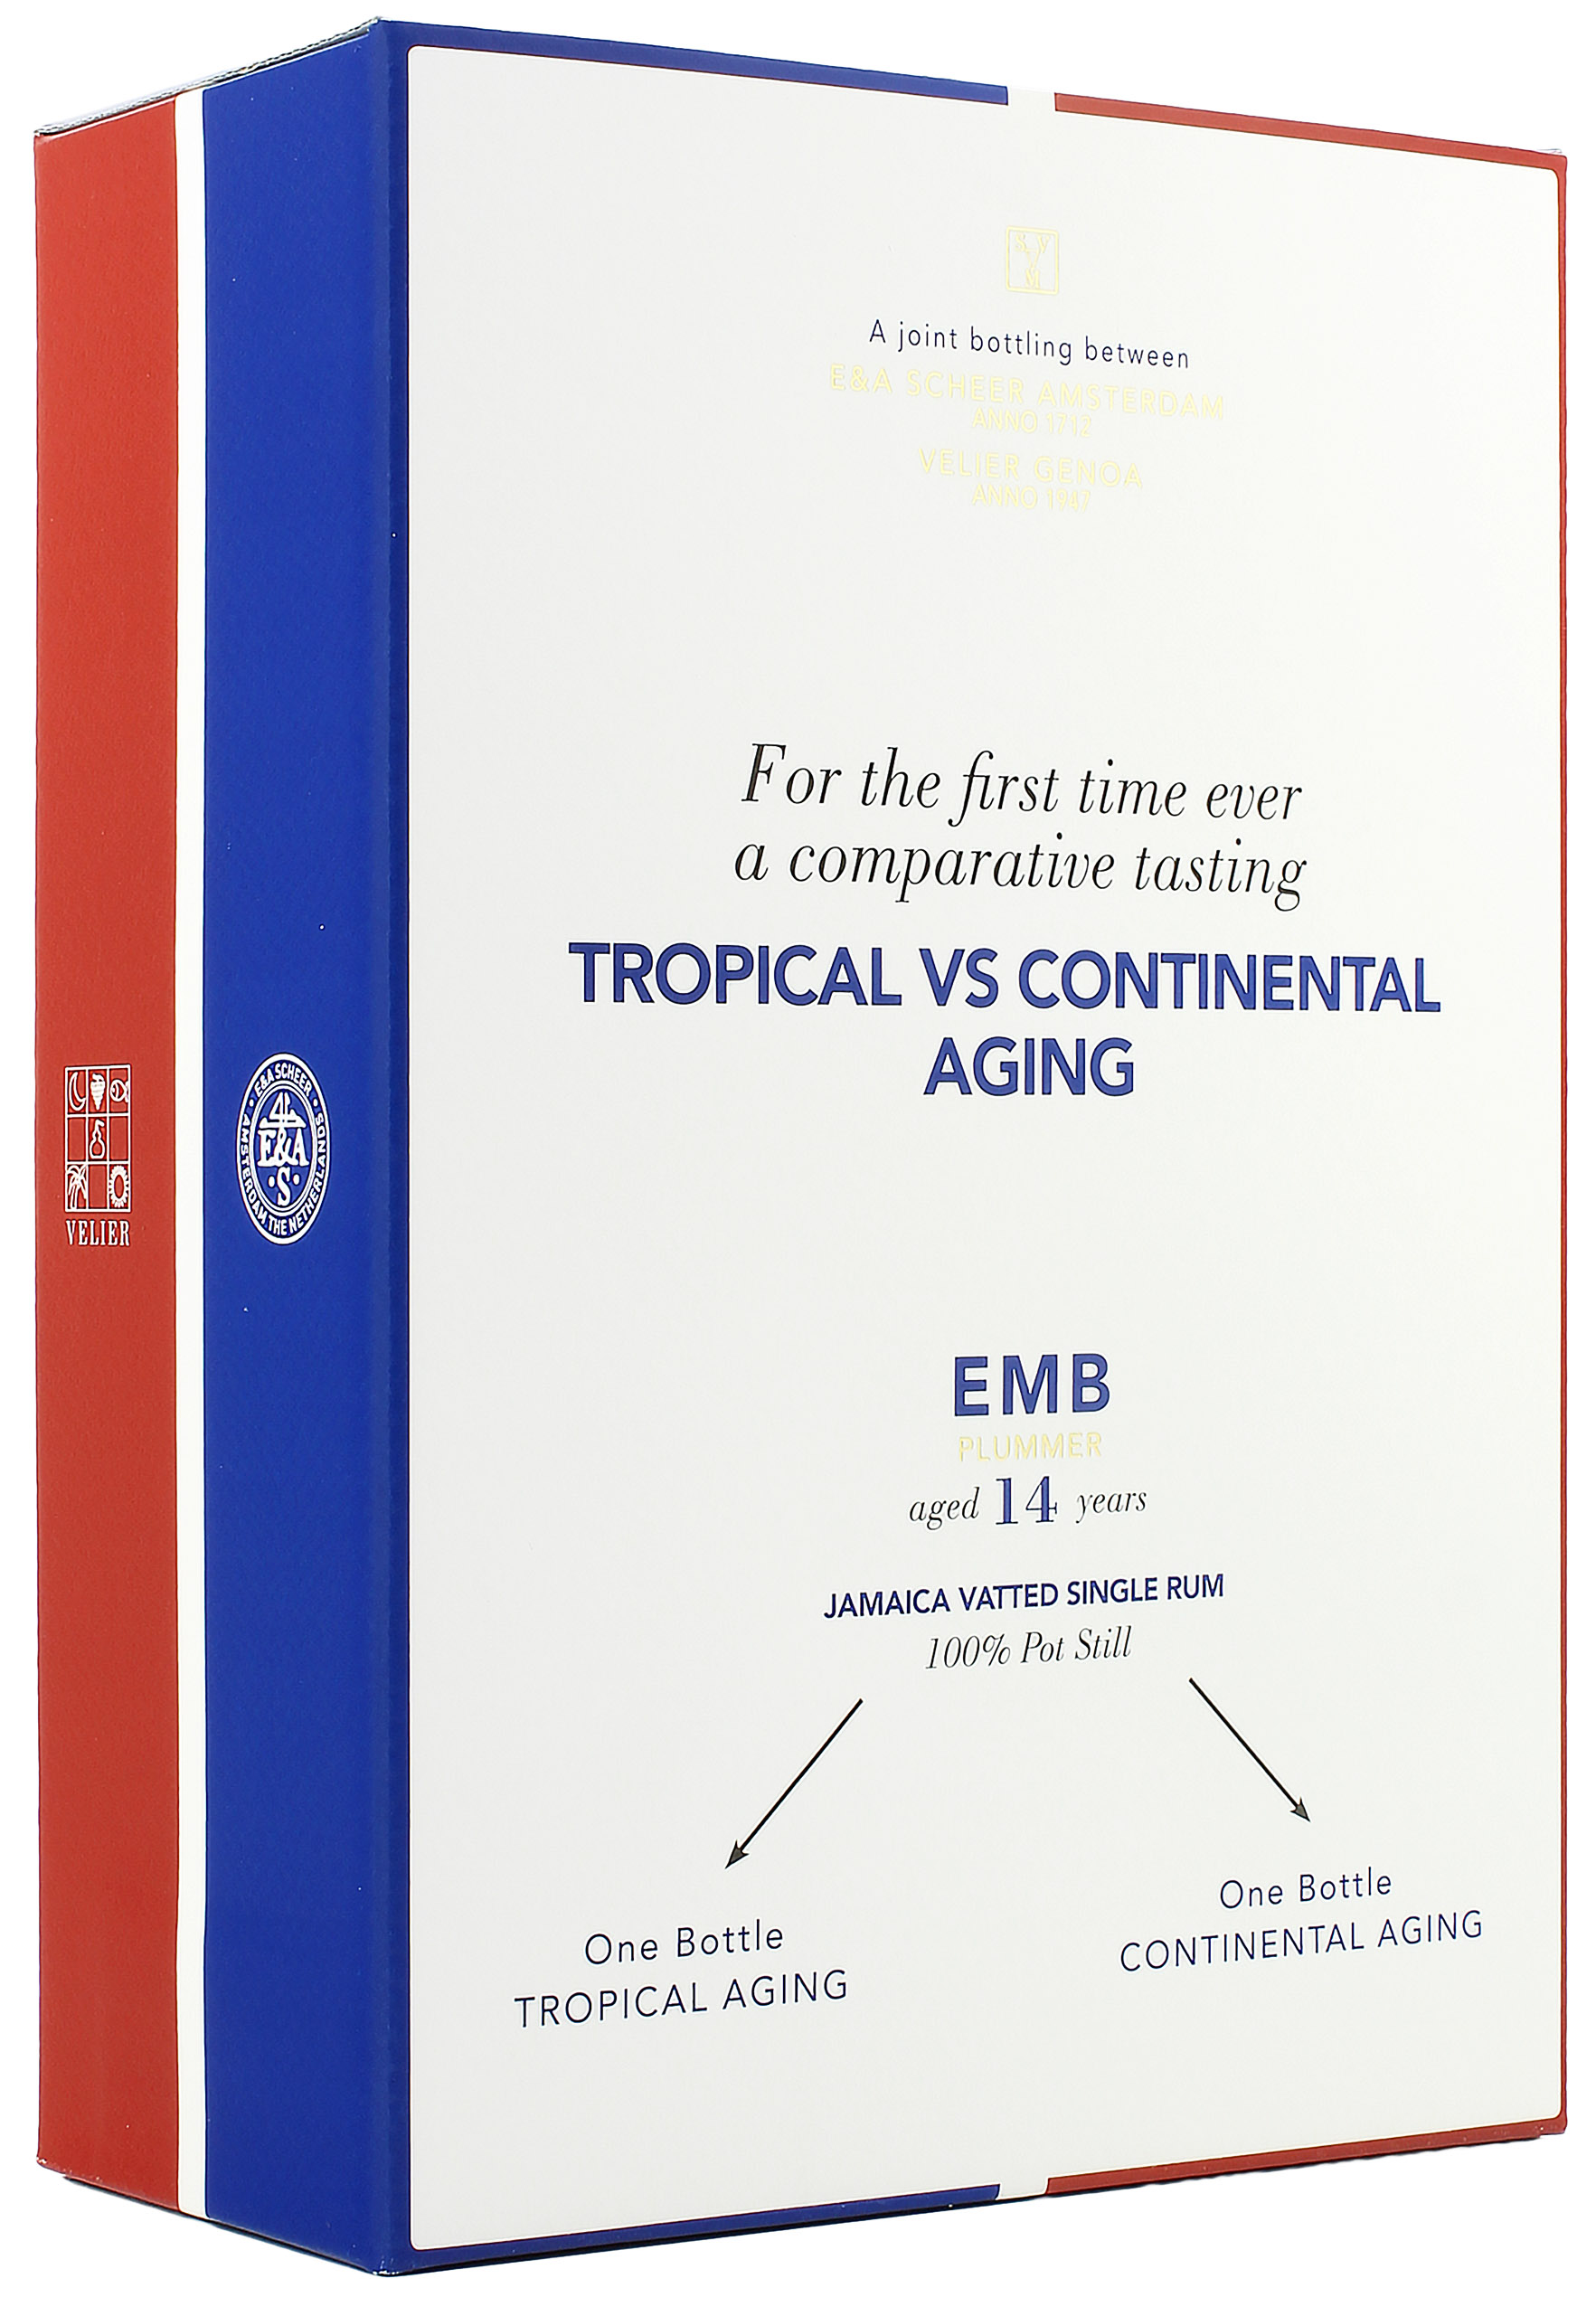 EMB Plummer 14 Jahre Tropical vs Continental Aging 2 Flaschen 67.3% 1,4l